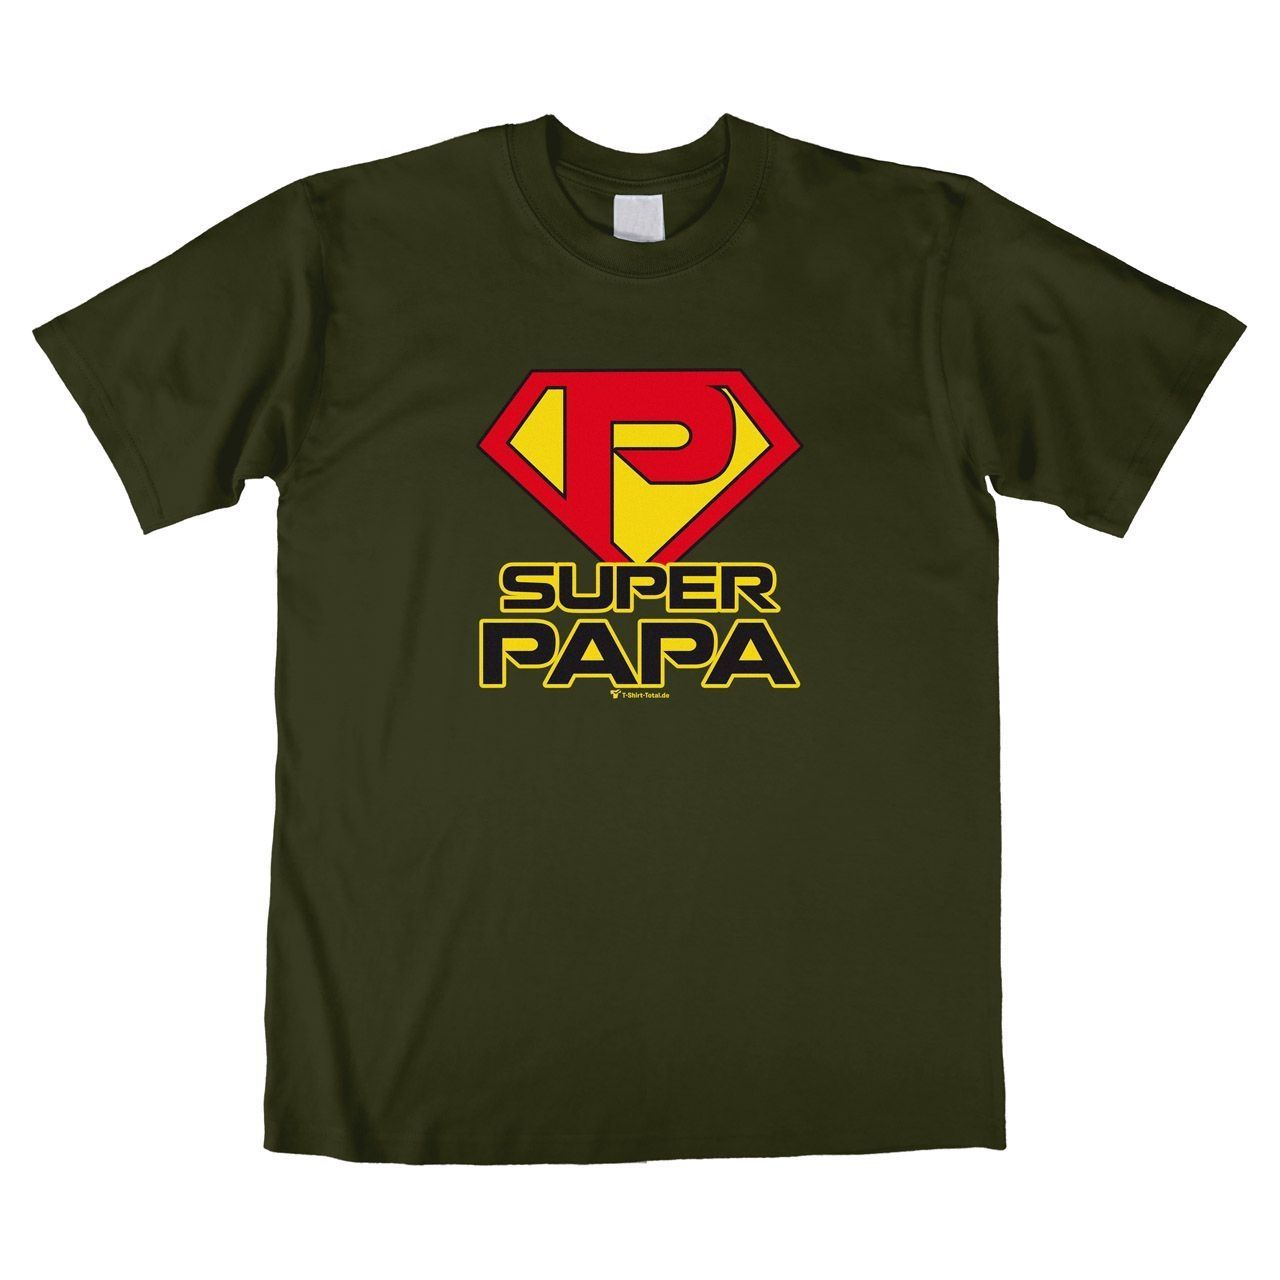 Super Papa Unisex T-Shirt khaki Large